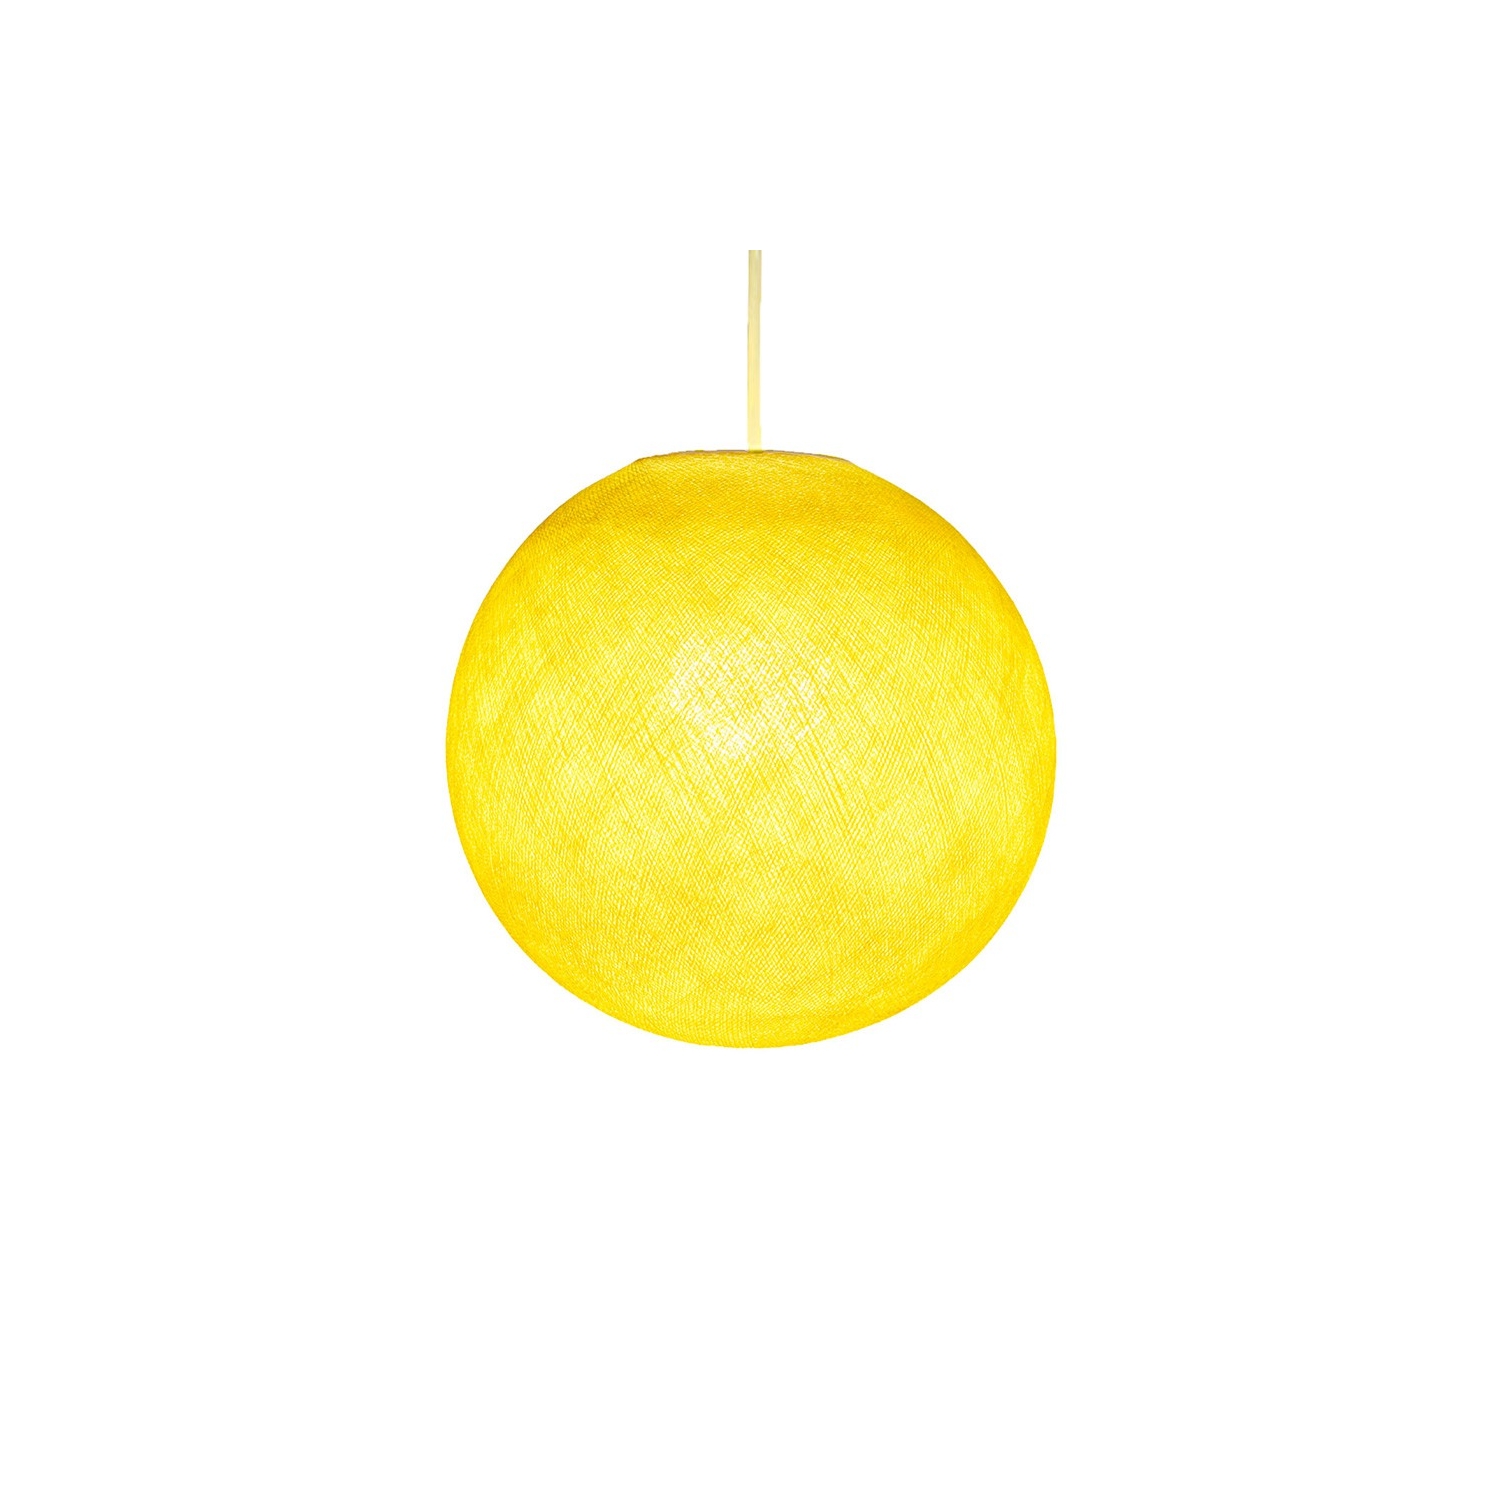 Sphere XS lampshade made of polyester fiber, 25 cm diameter - 100% handmade